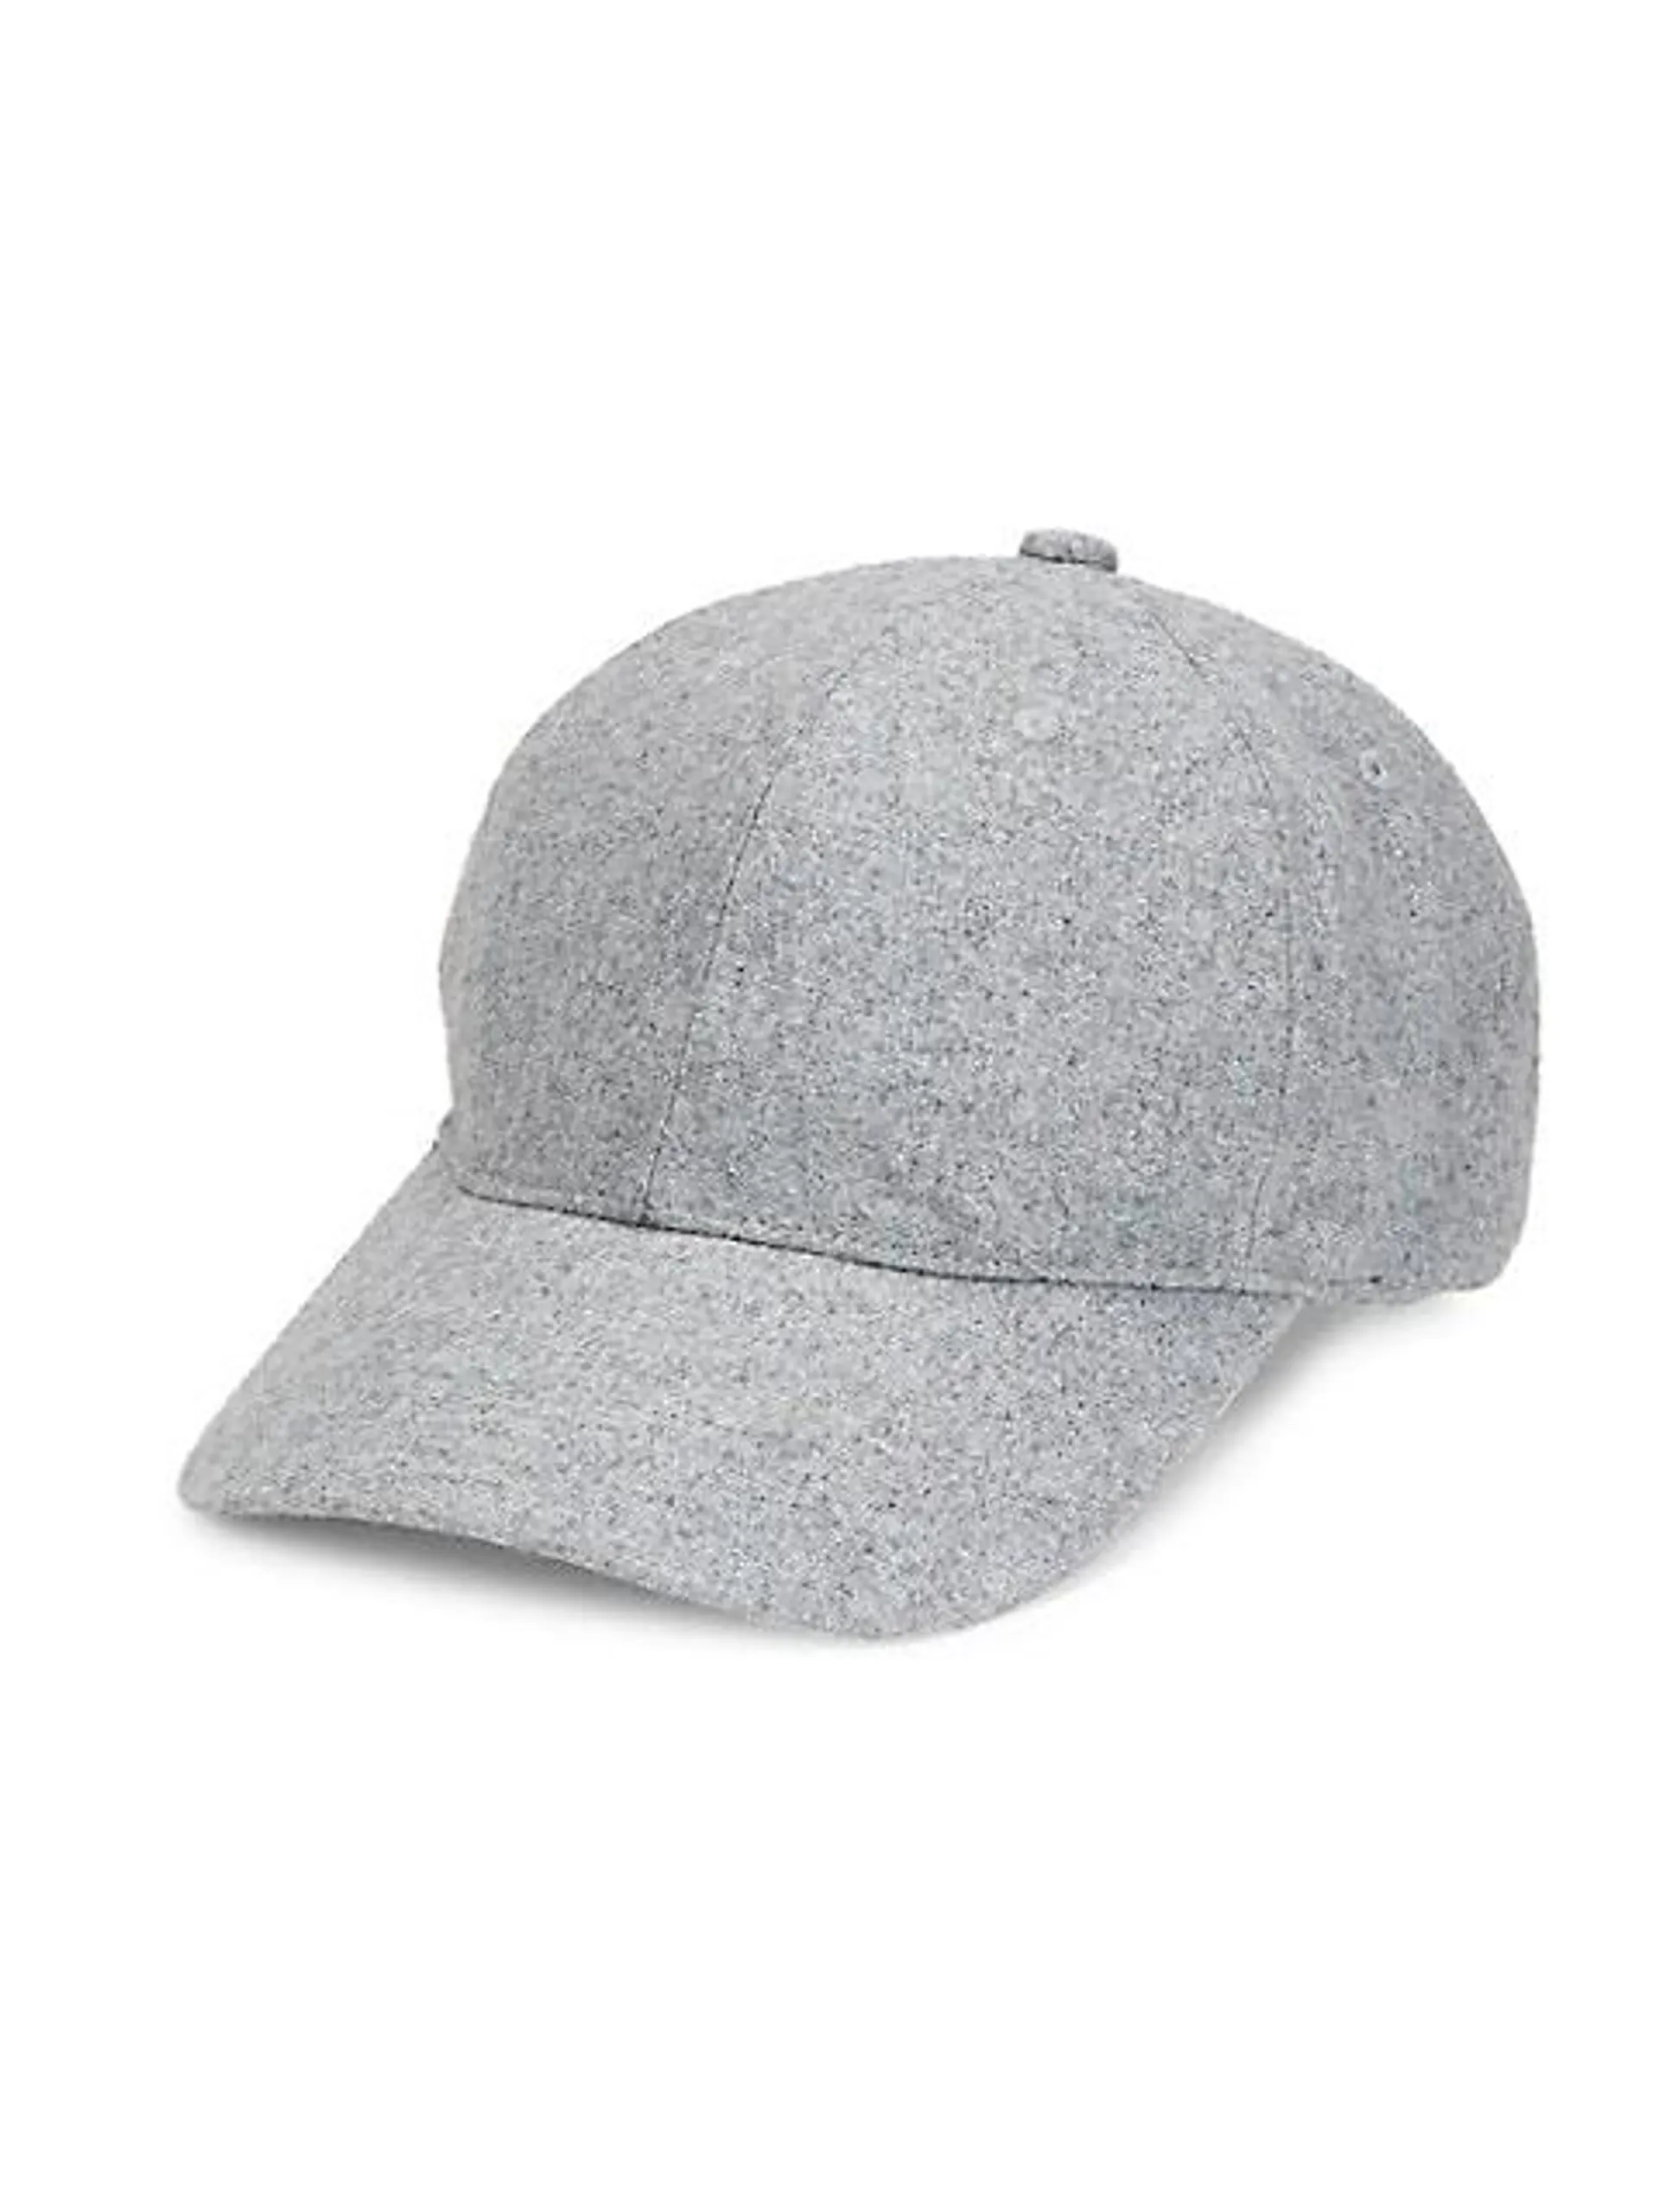 Donegal Polyester-Blend Hat